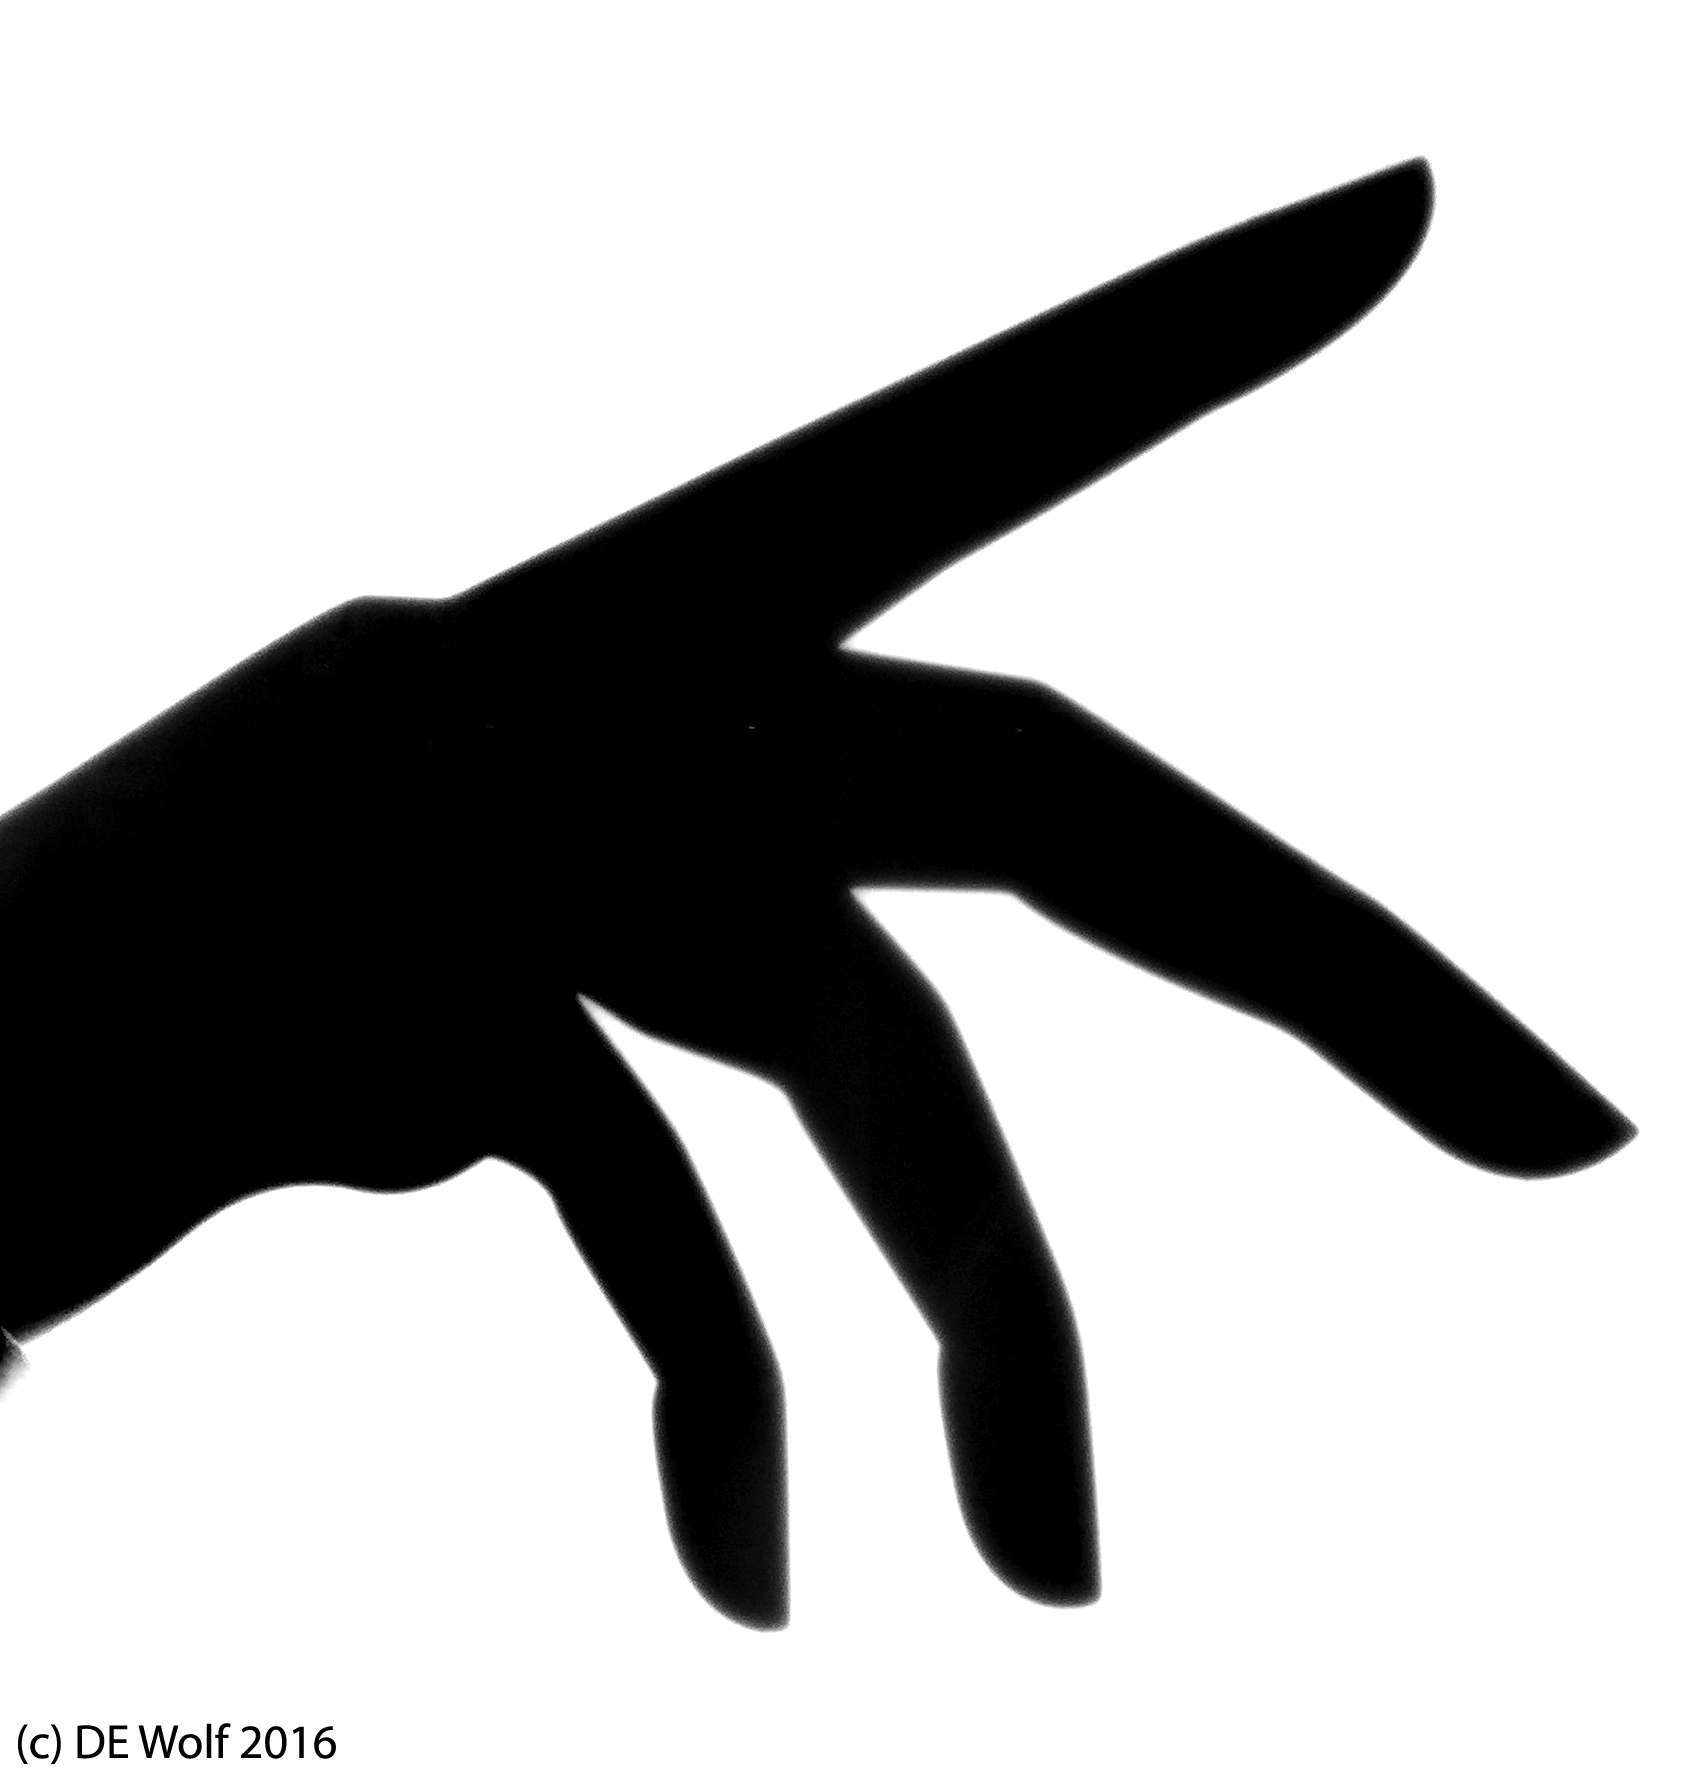 Figure 1 -Hand silhouette, IPhone photograph, (c) DE Wolf 2016.